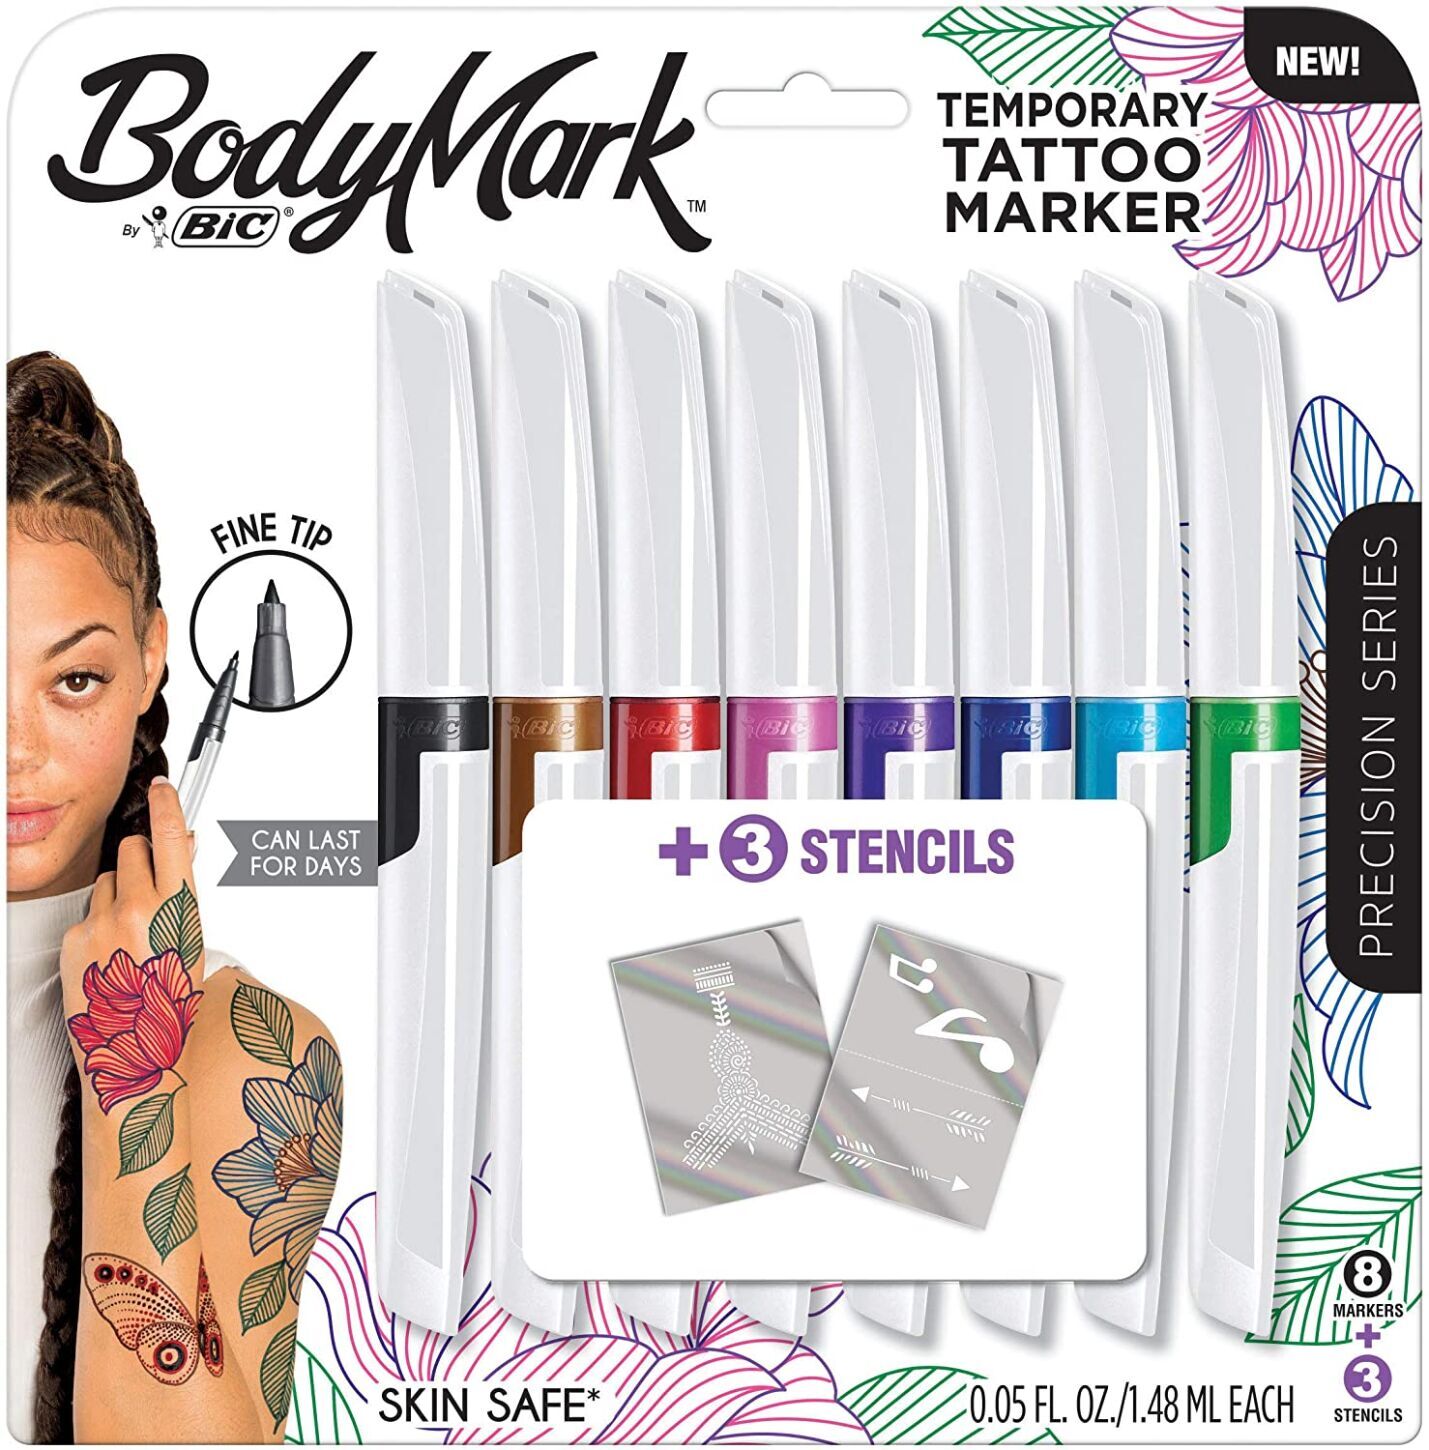 BODY MARK by BIC  Temporary Tattoo Marker  BlueRedGreen  NEW  eBay